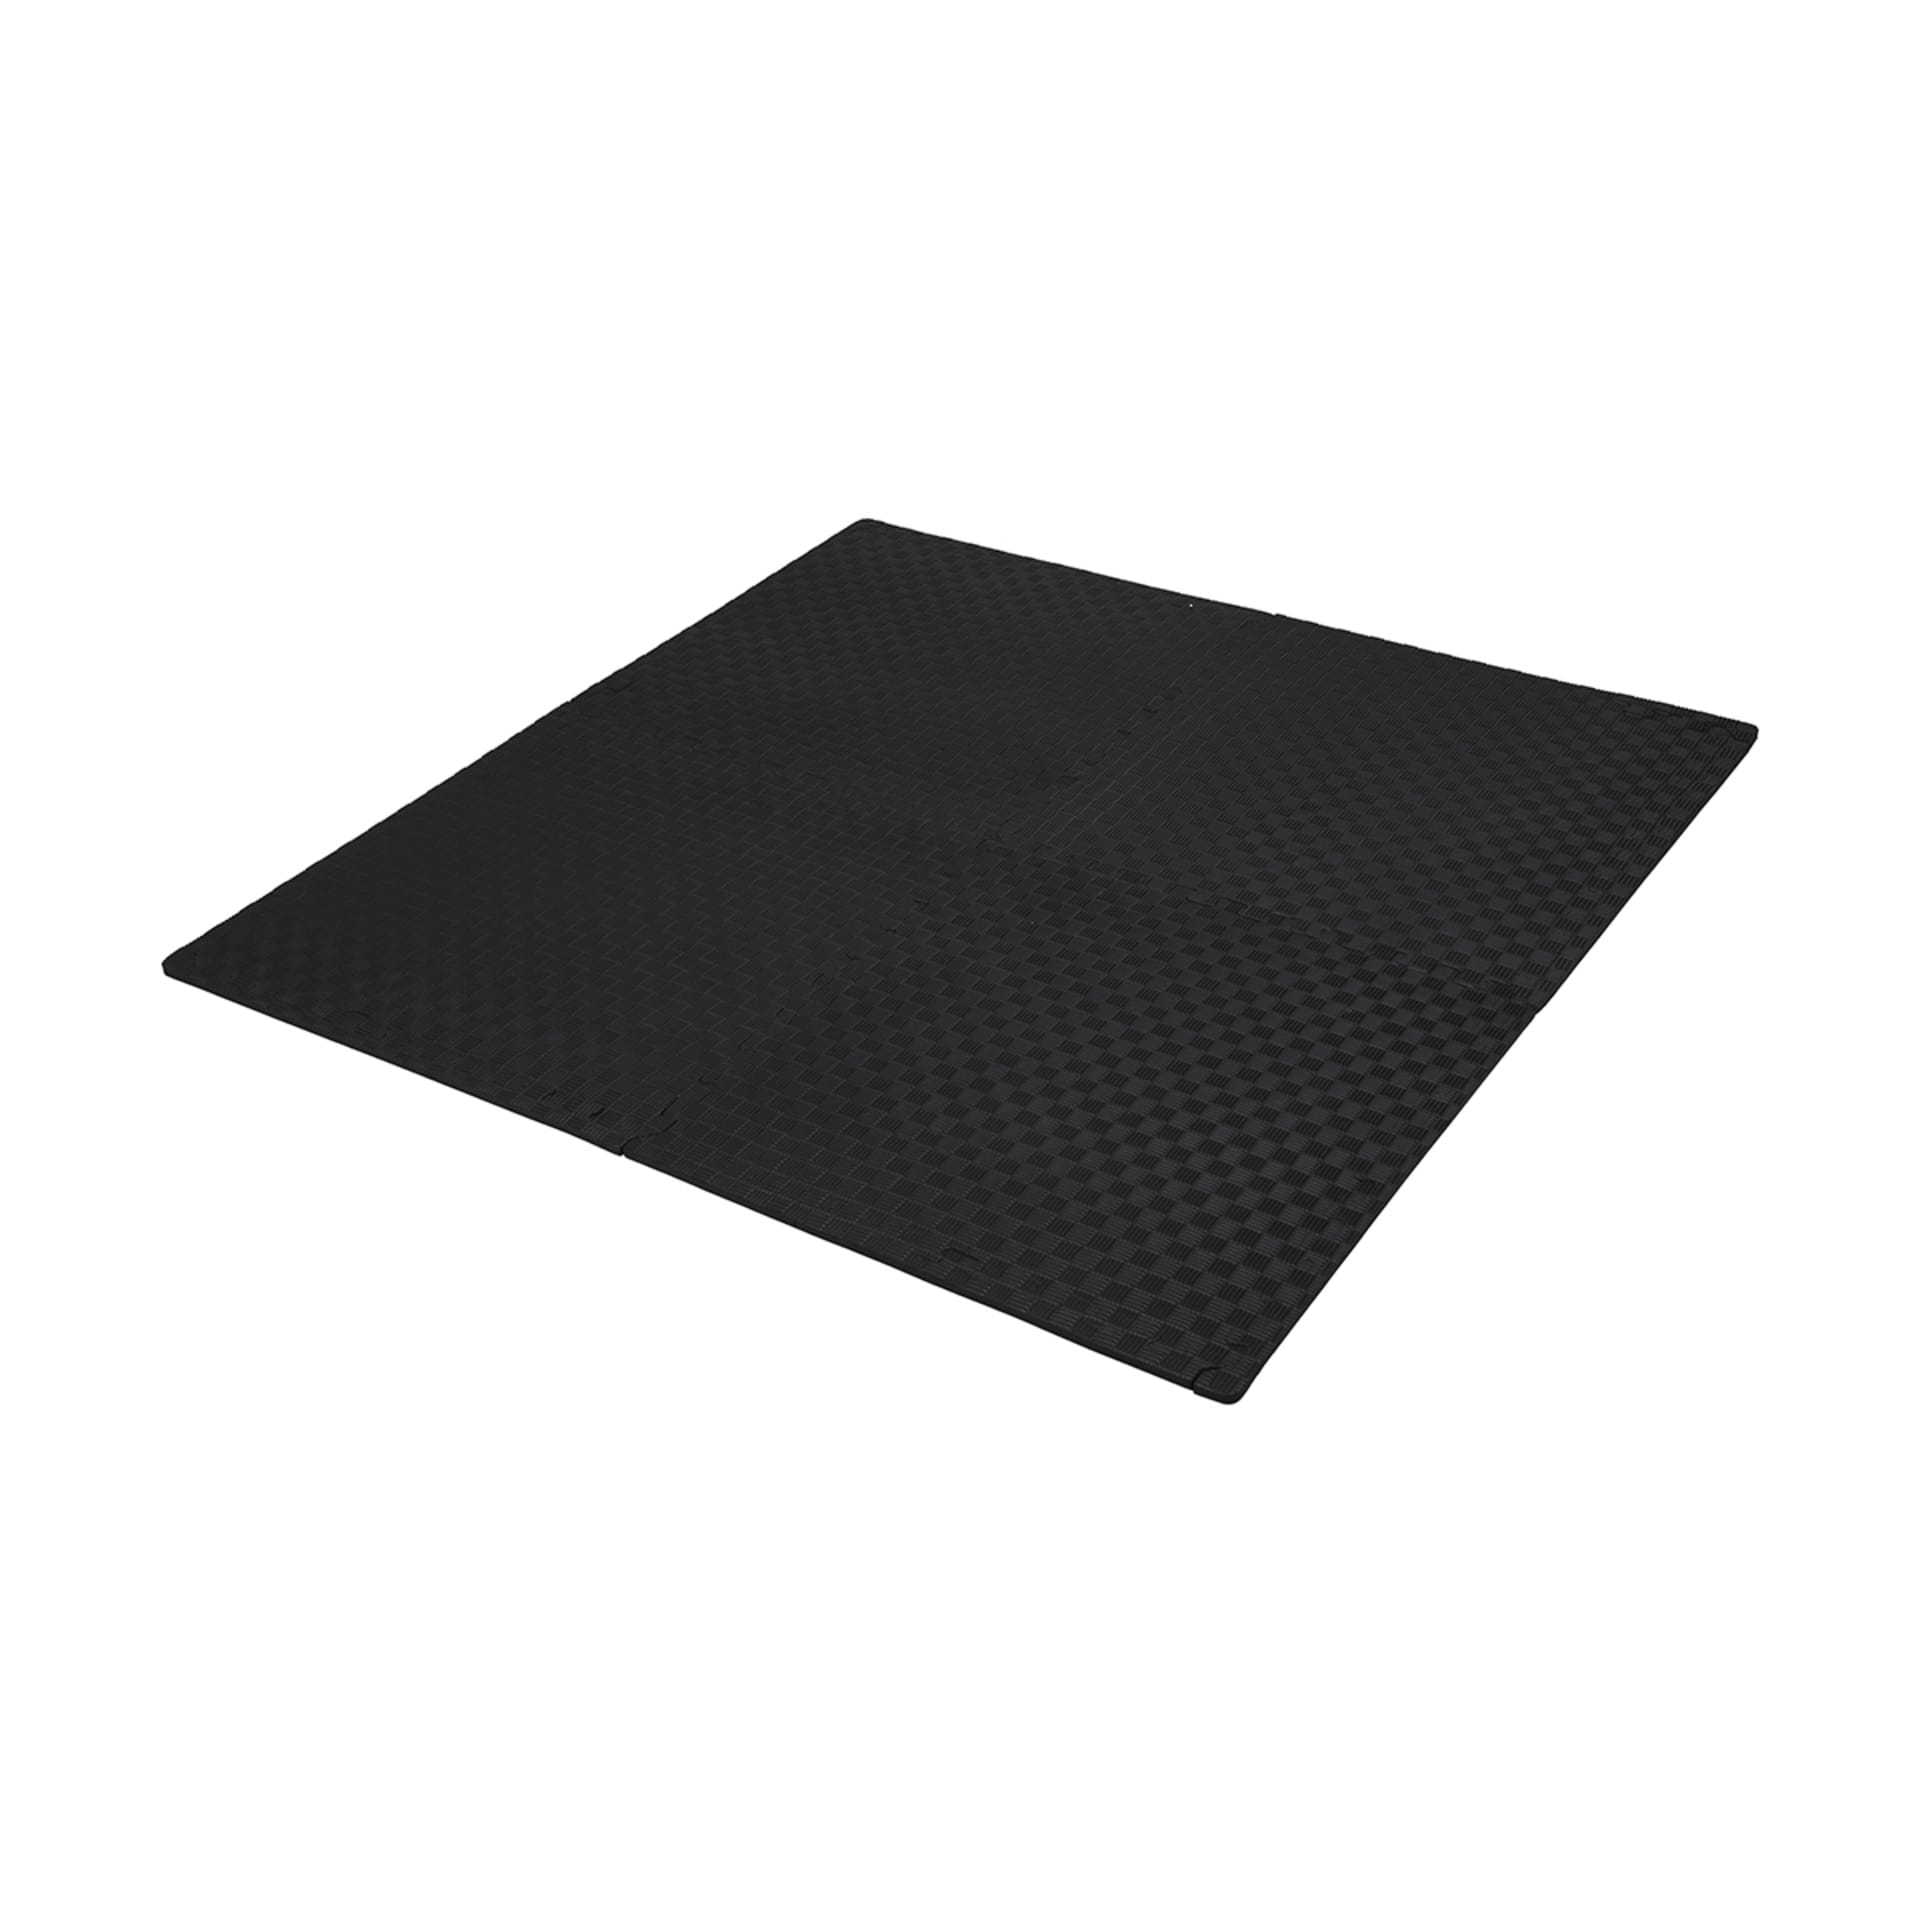 4 Pack EVA Solid Floor Tiles - Black - Kmart